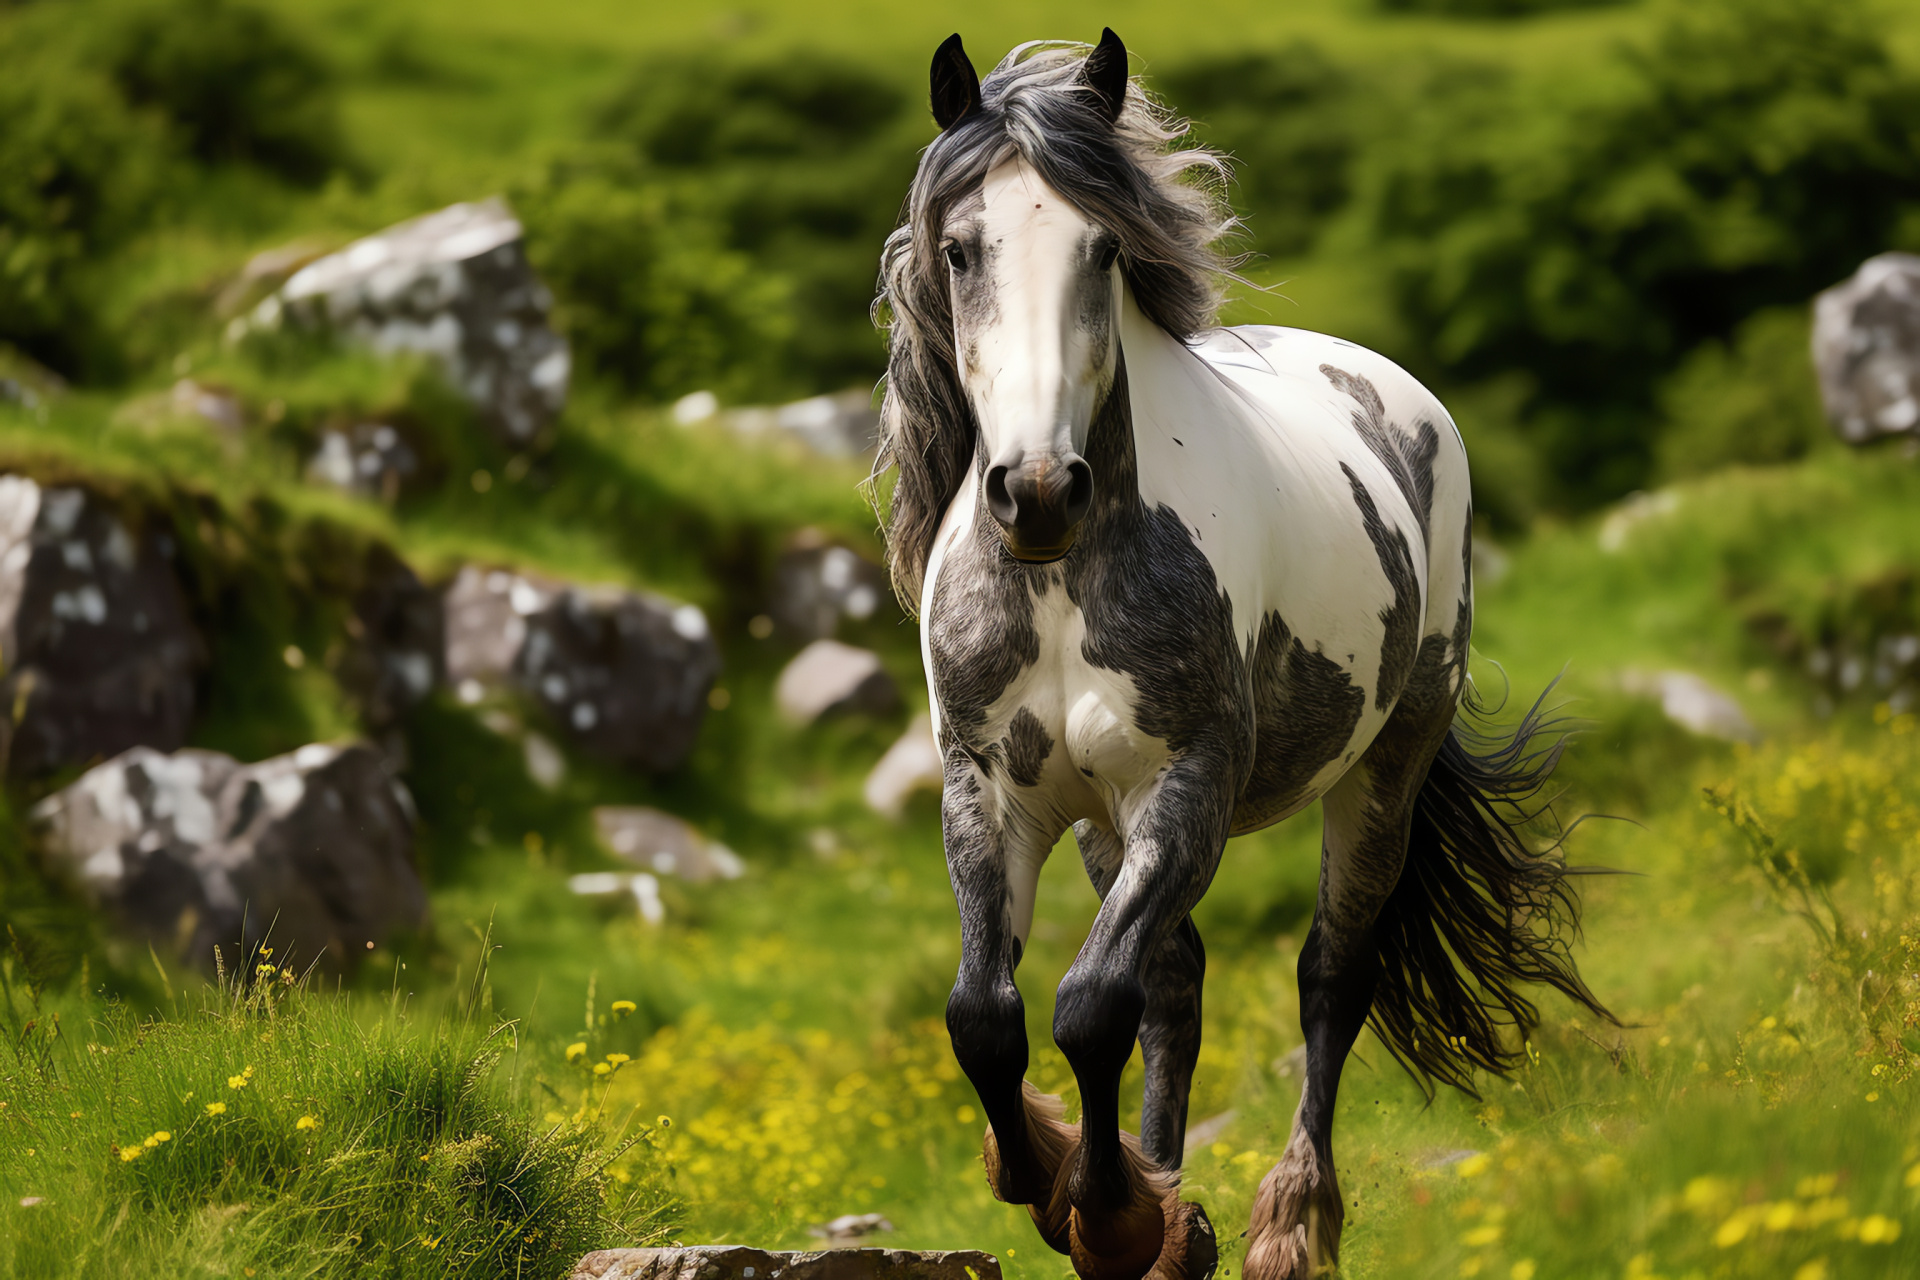 Wild Horse, Dappled gray coat, Wild pony and greenery, Equine beauty, Irish wildlife, HD Desktop Image